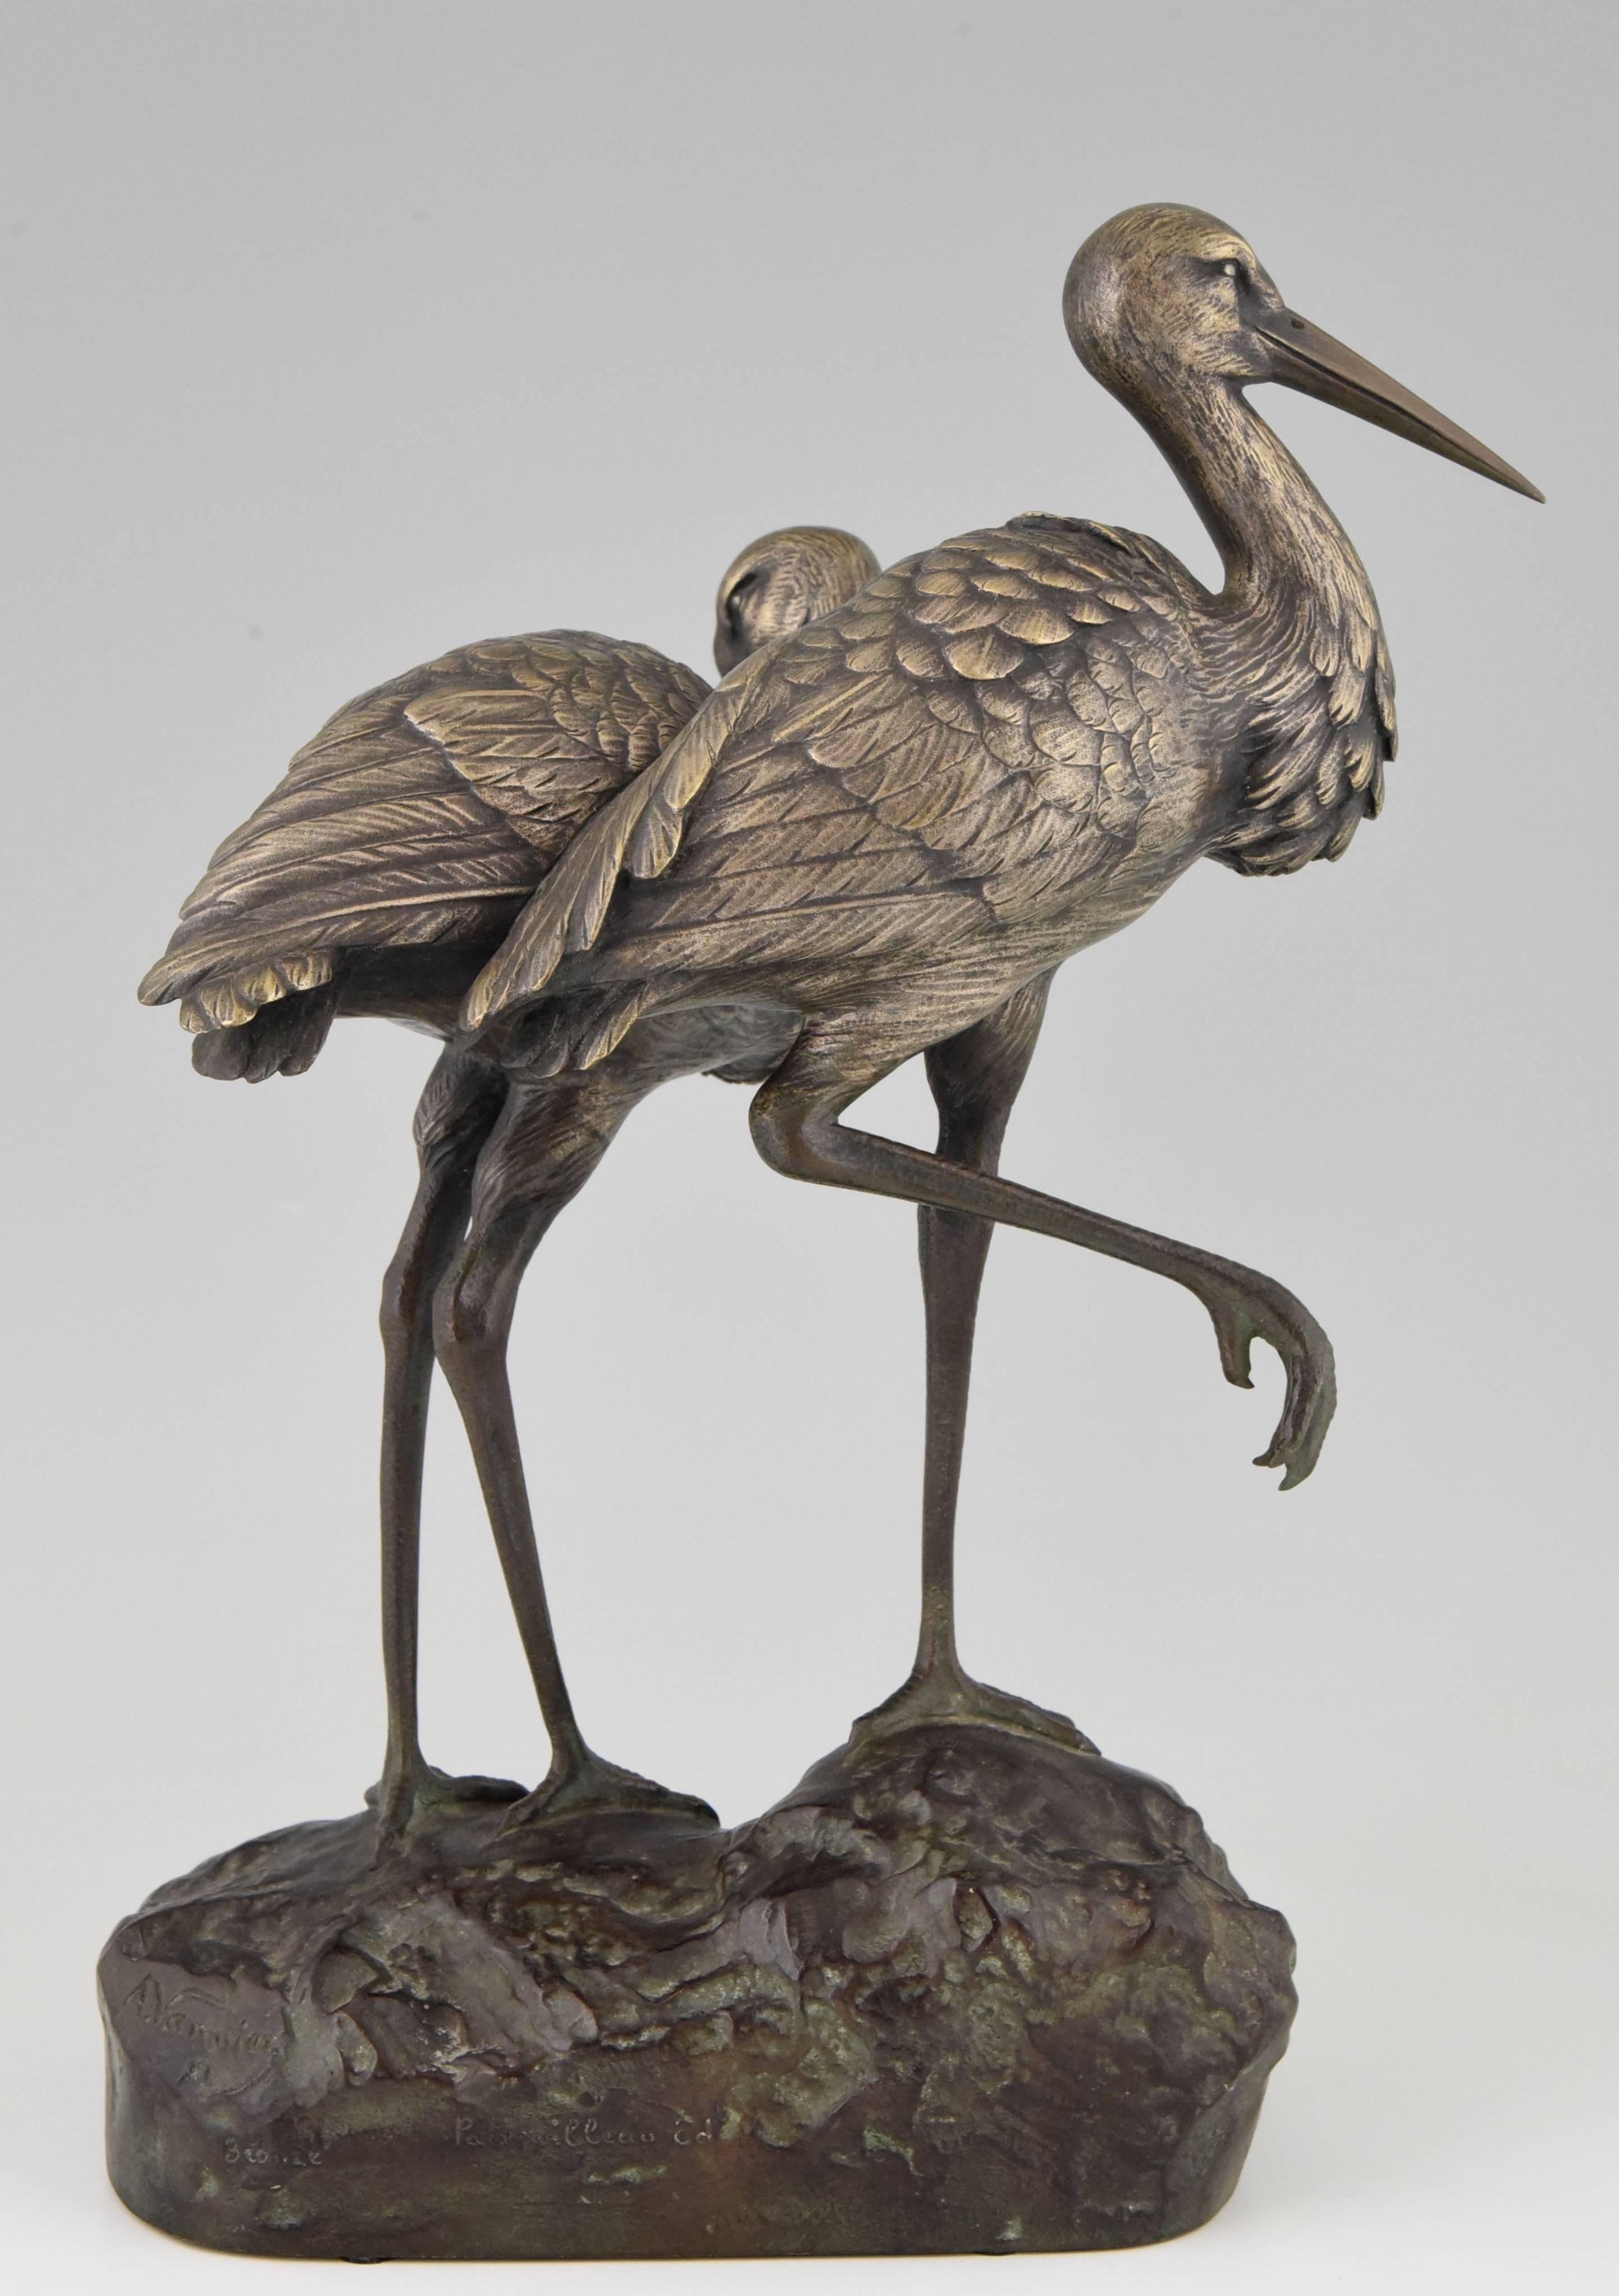 20th Century Art Deco Bronze Bird Sculpture by A. Vannier  1930  France